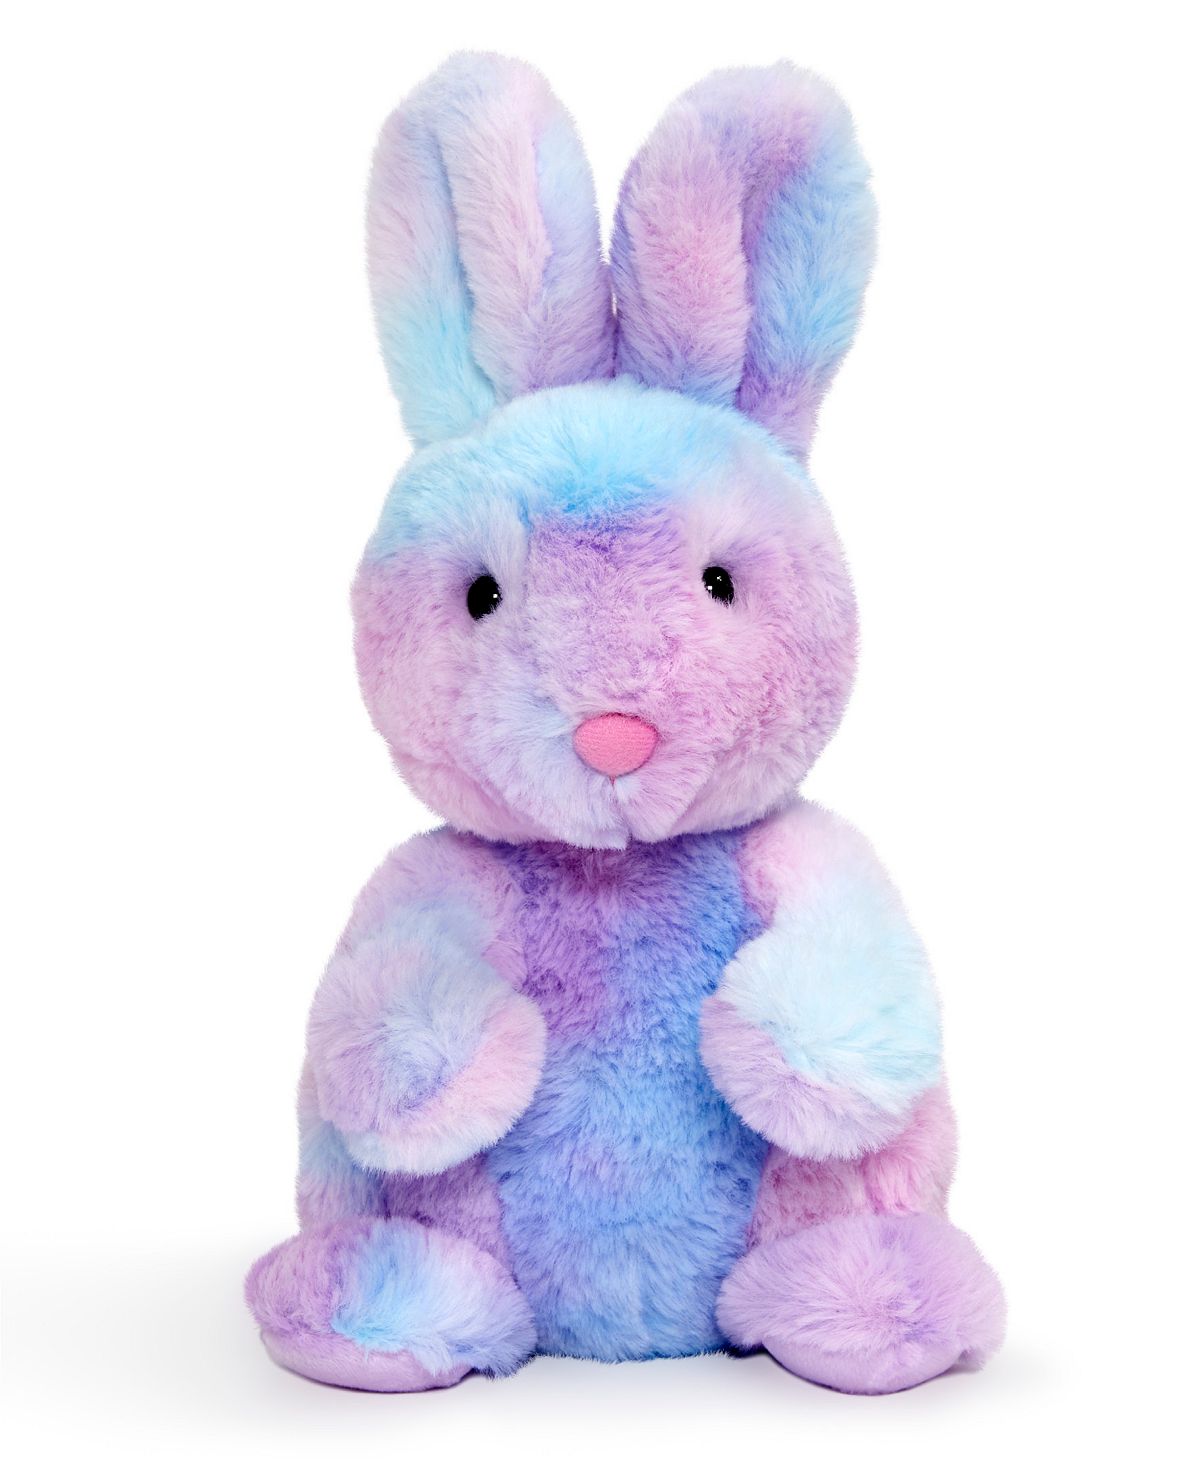 Geoffrey's Toy Box 9-Inch Tie Dye Bunny Plush - Colorful and Cuddly